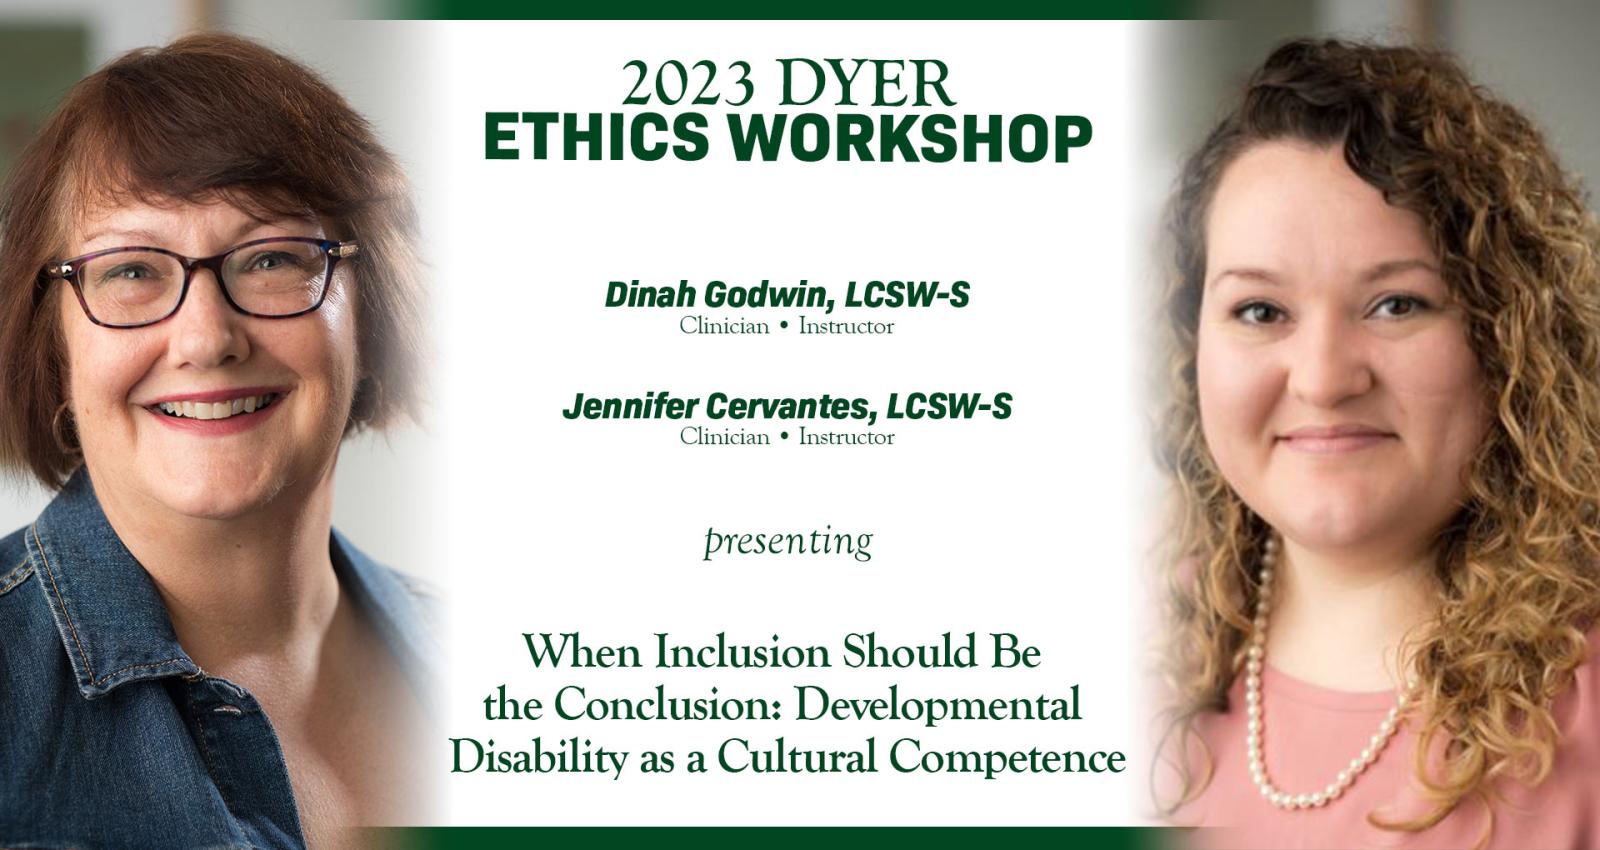 Dyer Ethics Workshop 2023 